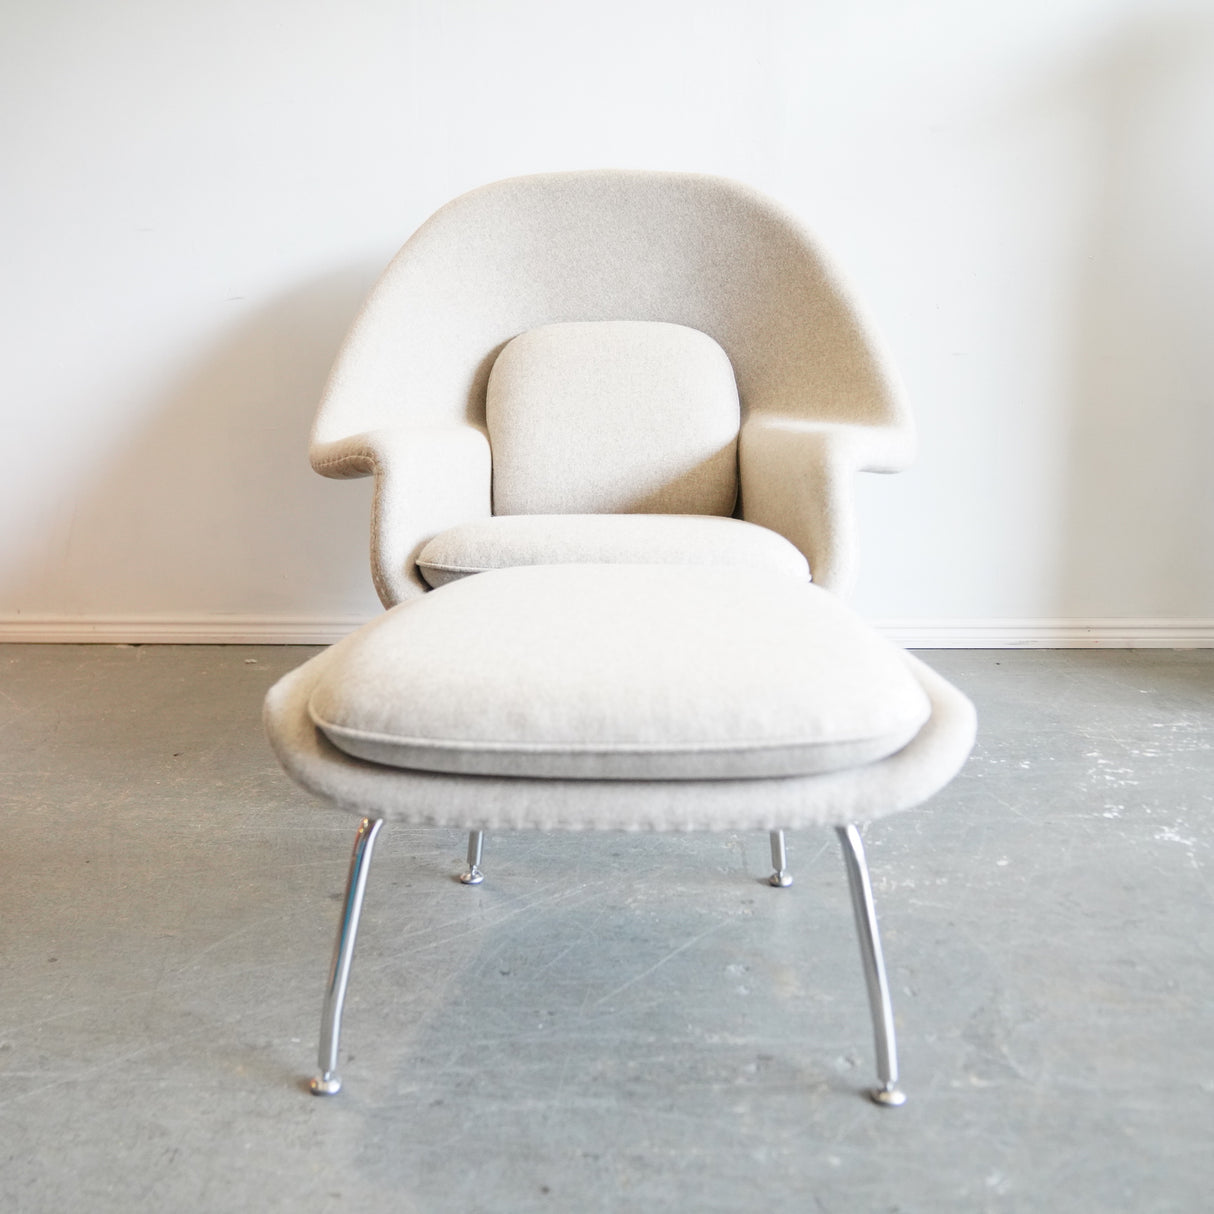 Rove Concepts Eero Saarinen Style Womb chair and Ottoman